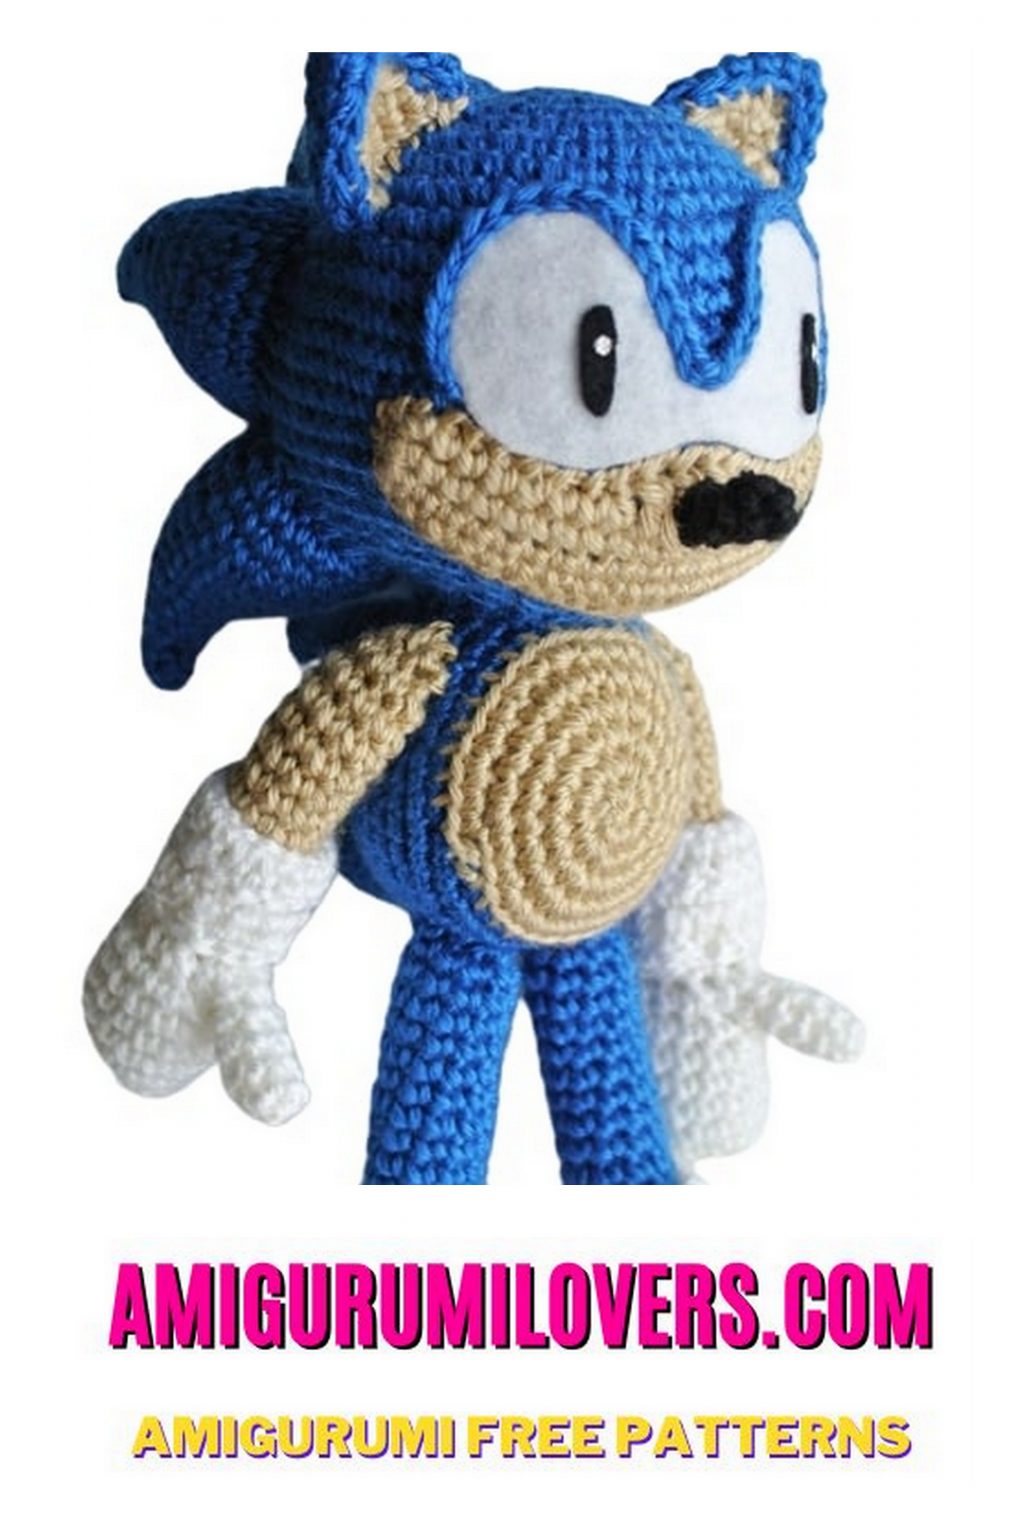 Super Sonic Amigurumi Free Crochet Pattern – Craft Your Own Speedster ...